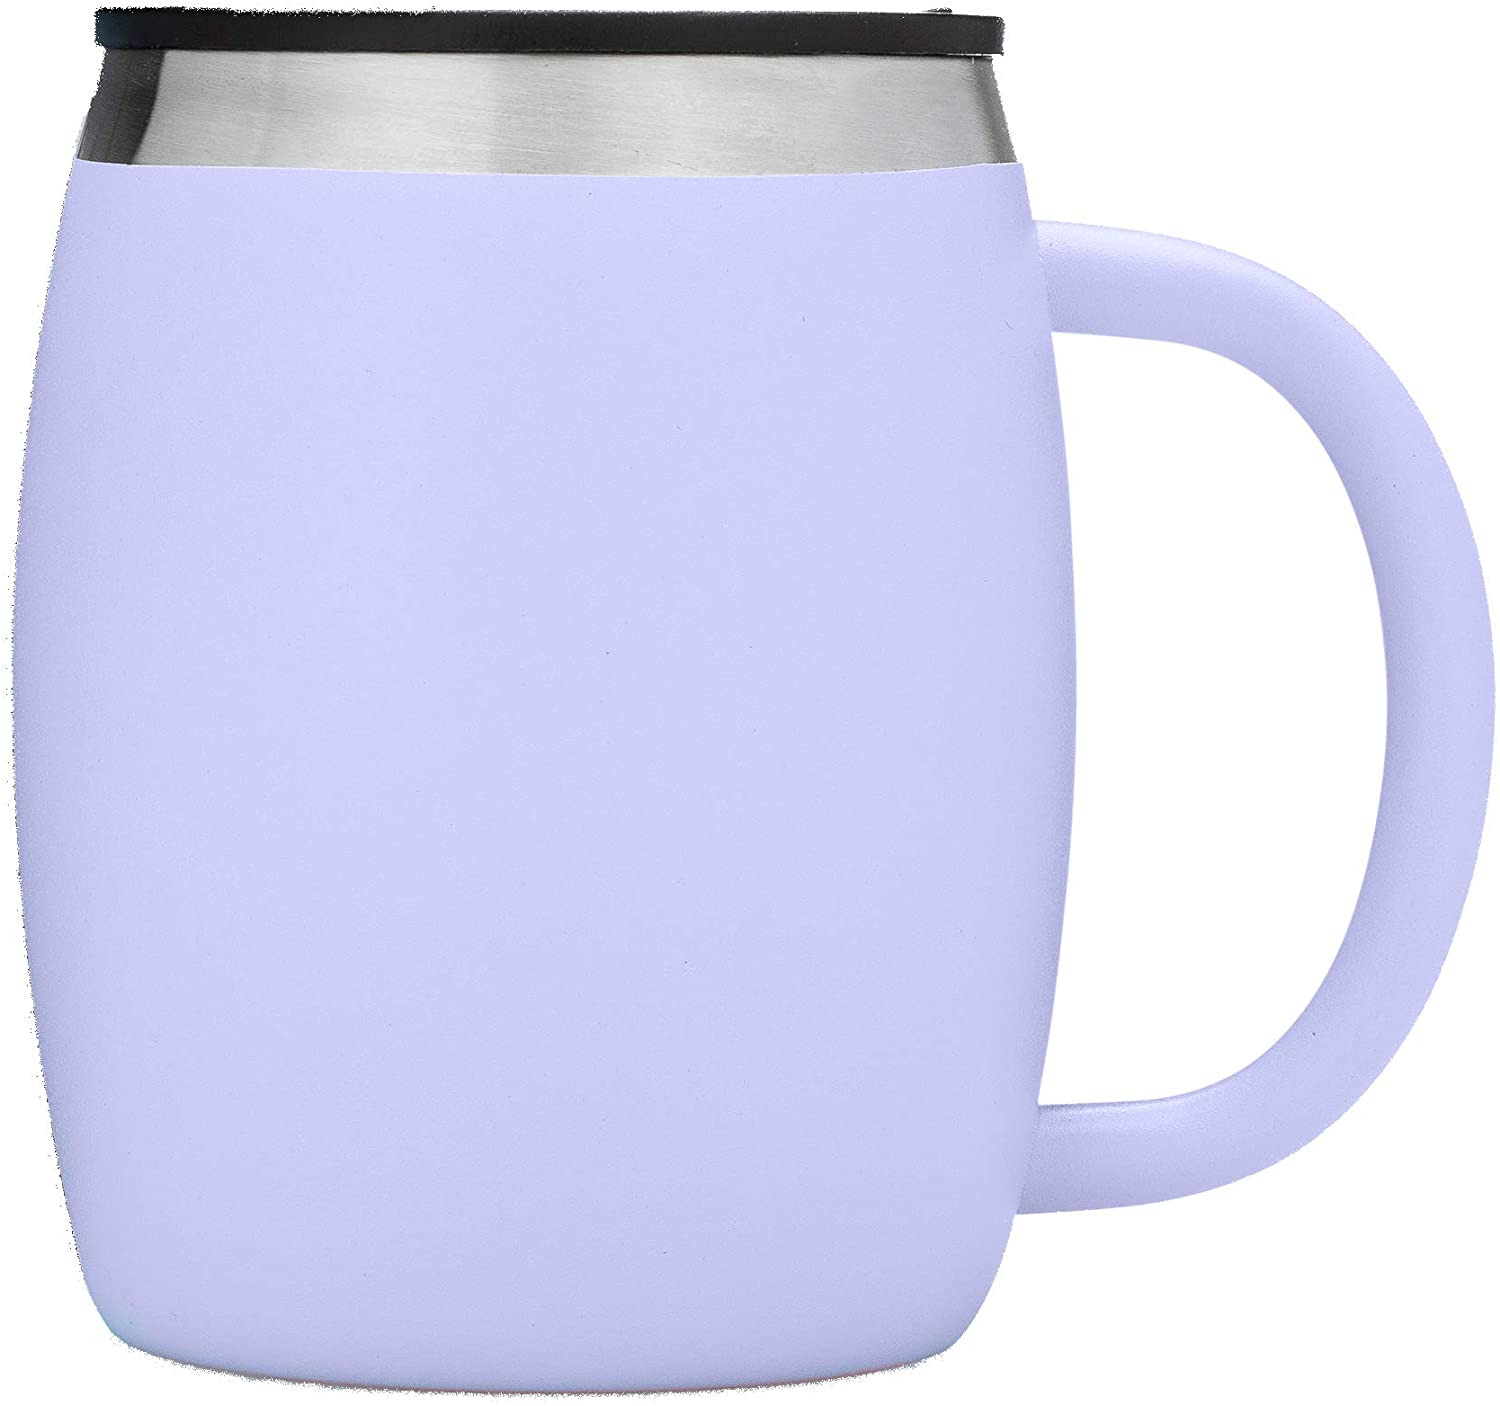 AVITO-Stainless-Steel-double-wall-Insulated-Coffee-Mug-min